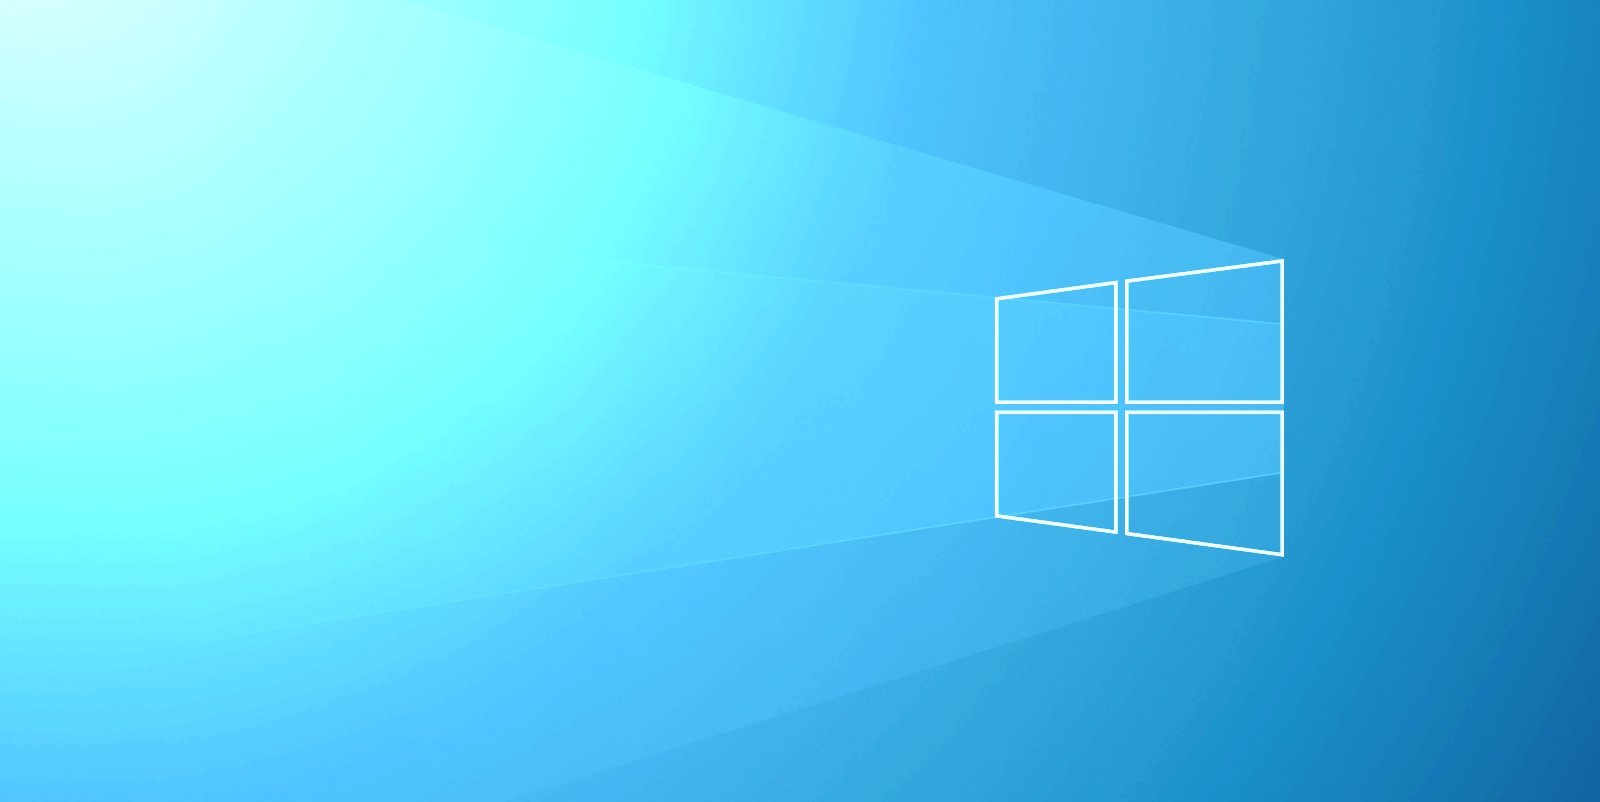 Free Windows 10 Wallpaper Downloads 100 Windows 10 Wallpapers for FREE   Wallpaperscom